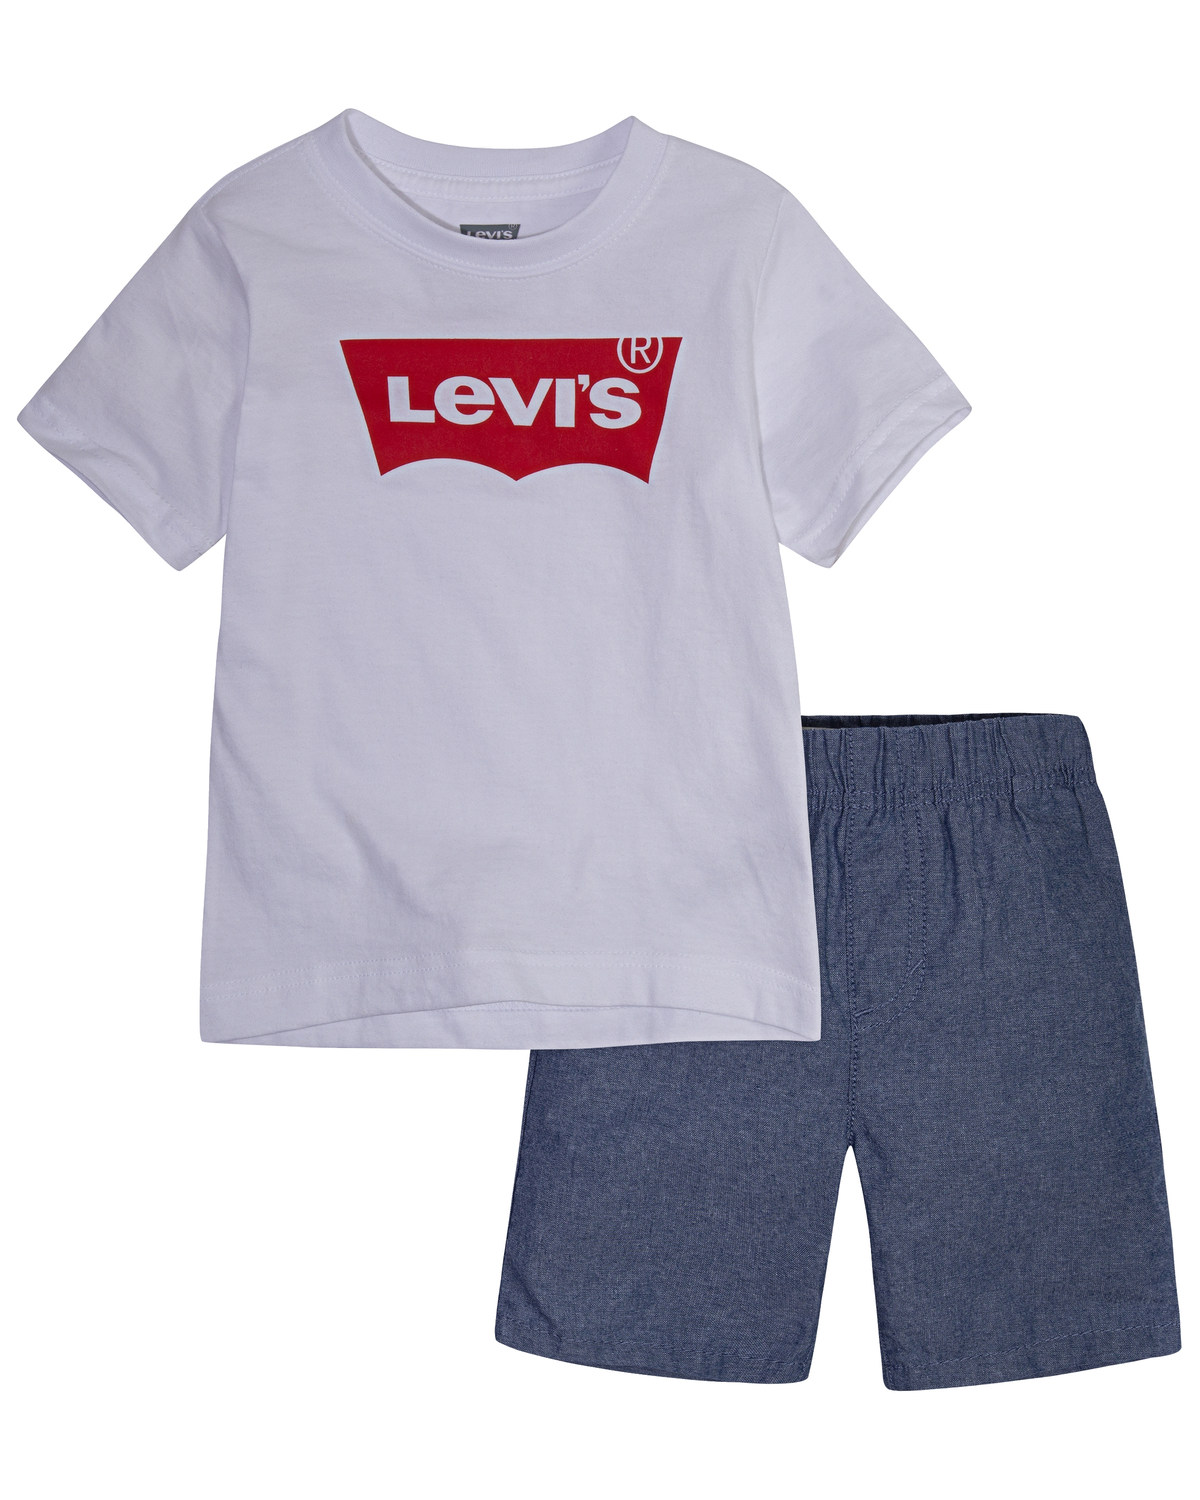 Levi's Toddler Boys' Batwing Logo Short Sleeve T-Shirt & Shorts Set - 2 Piece